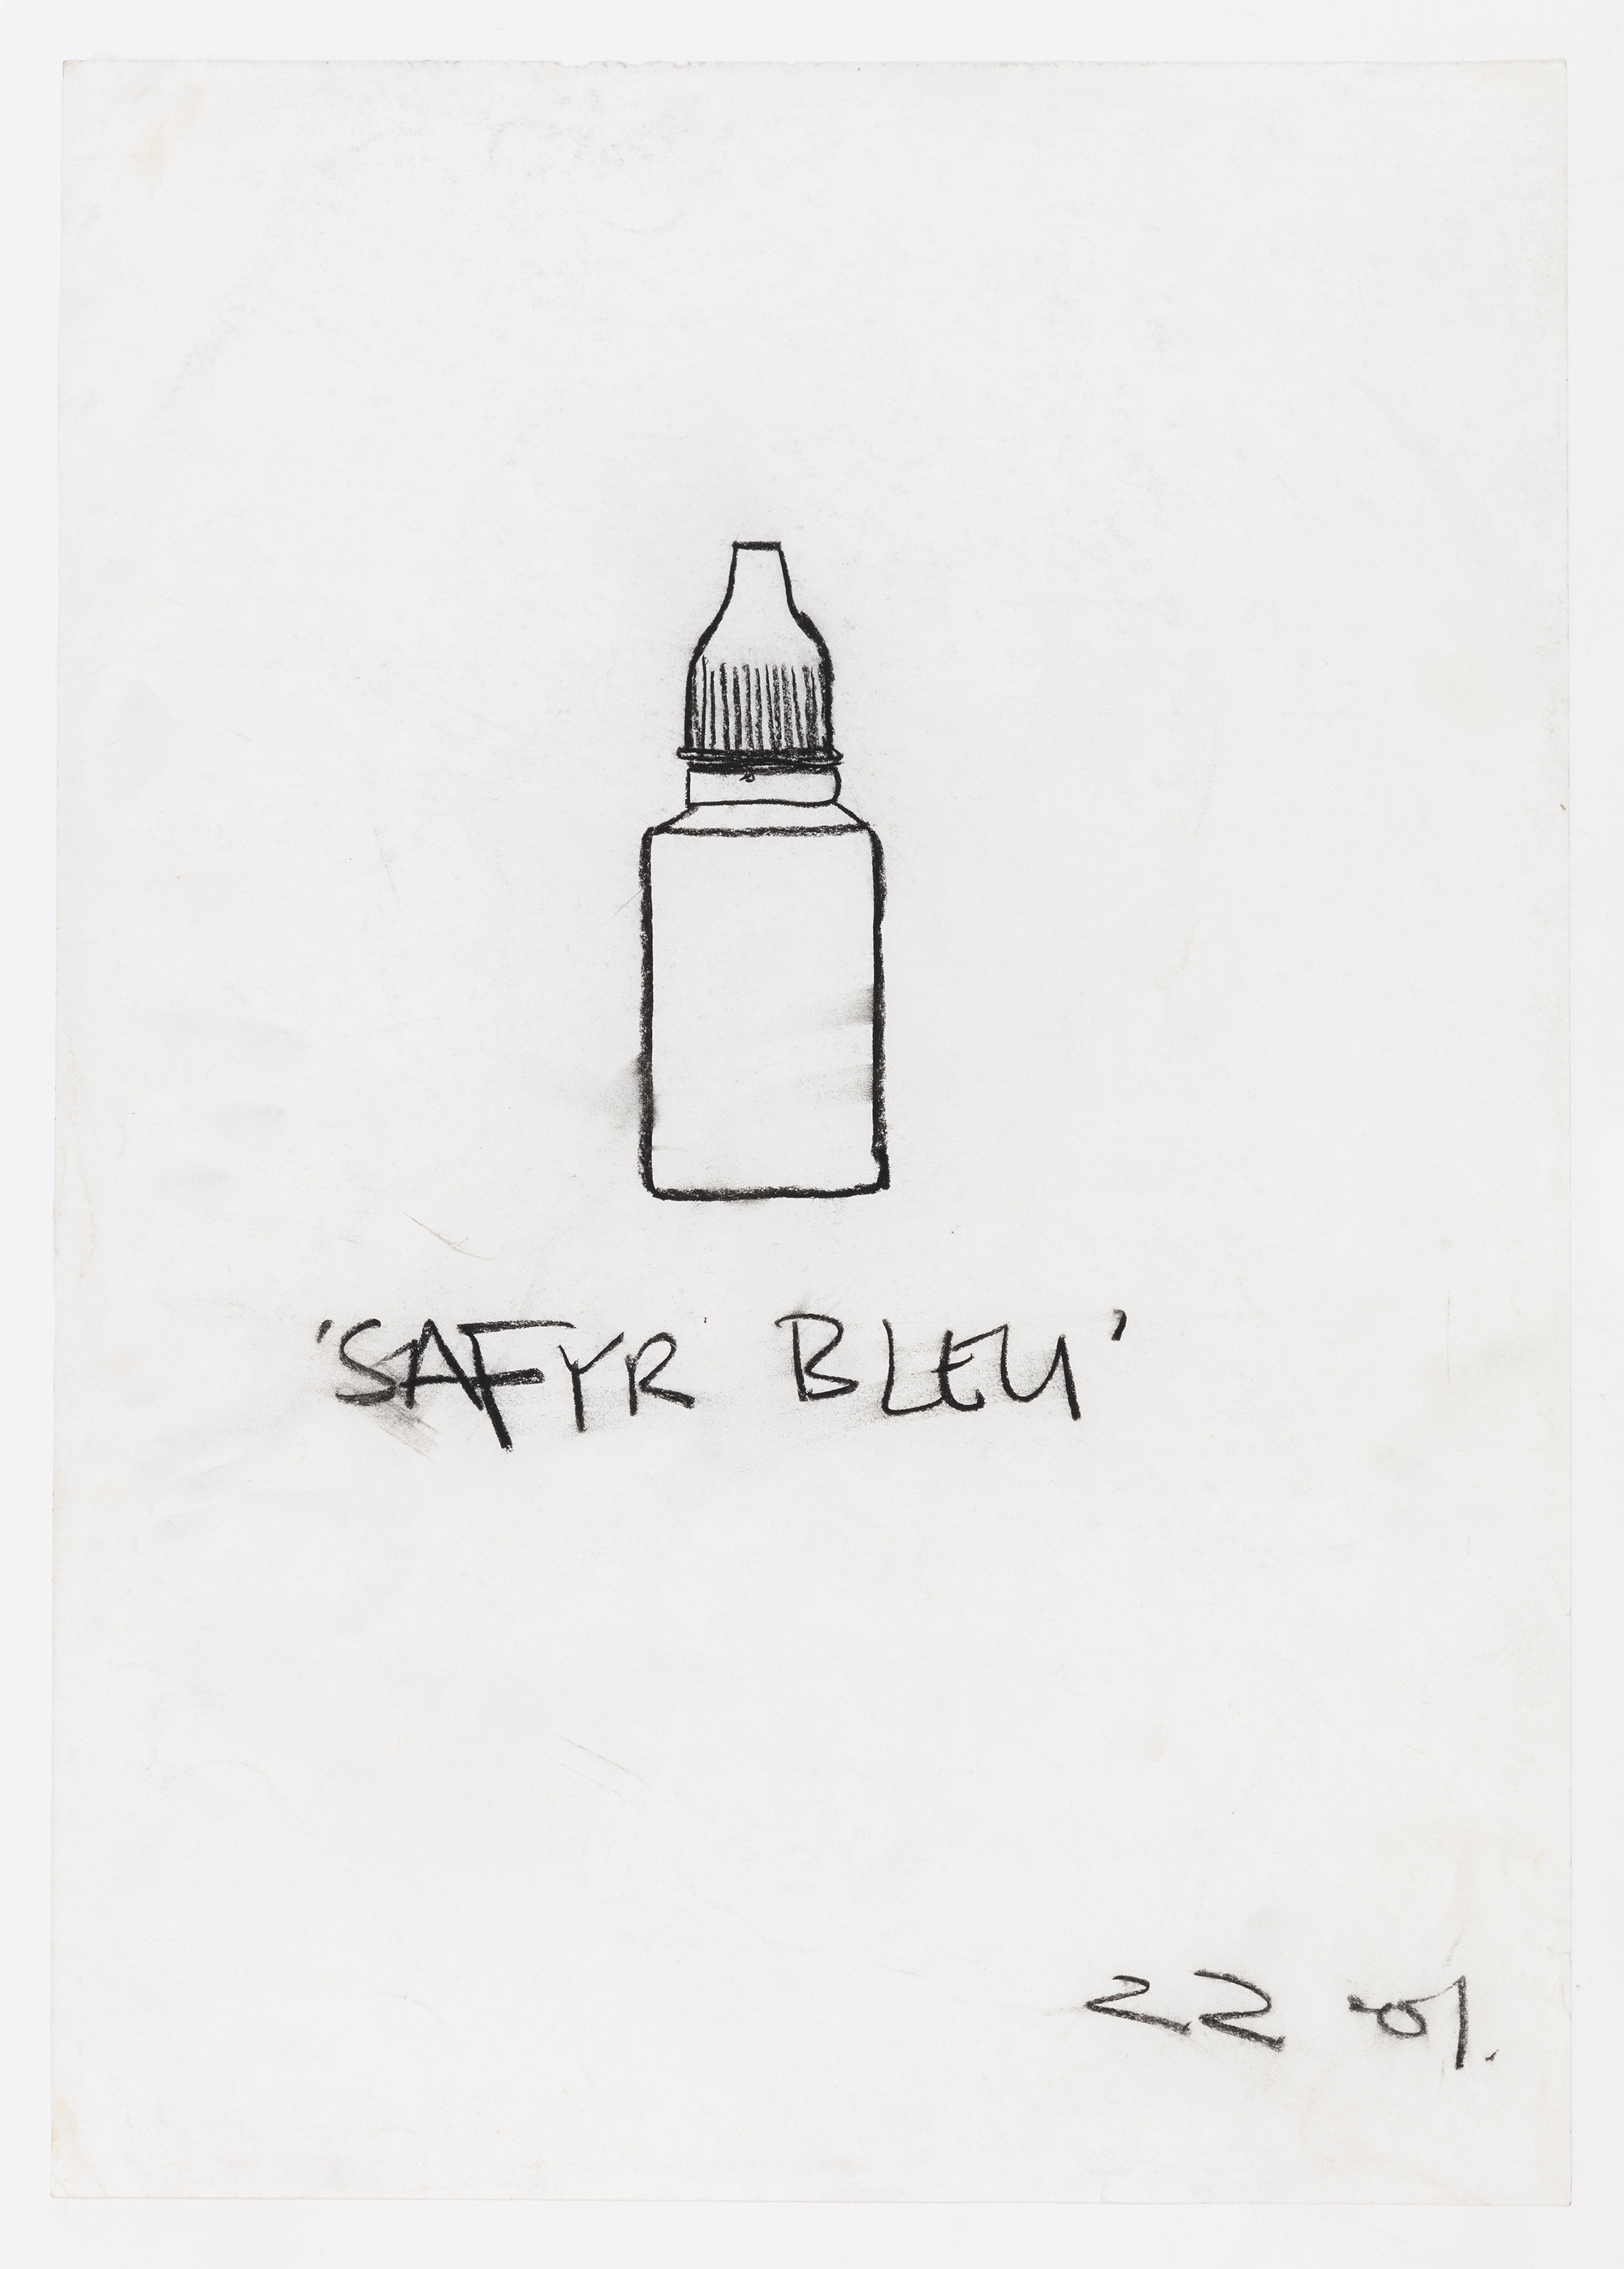  - SAFYR BLEU, 2001